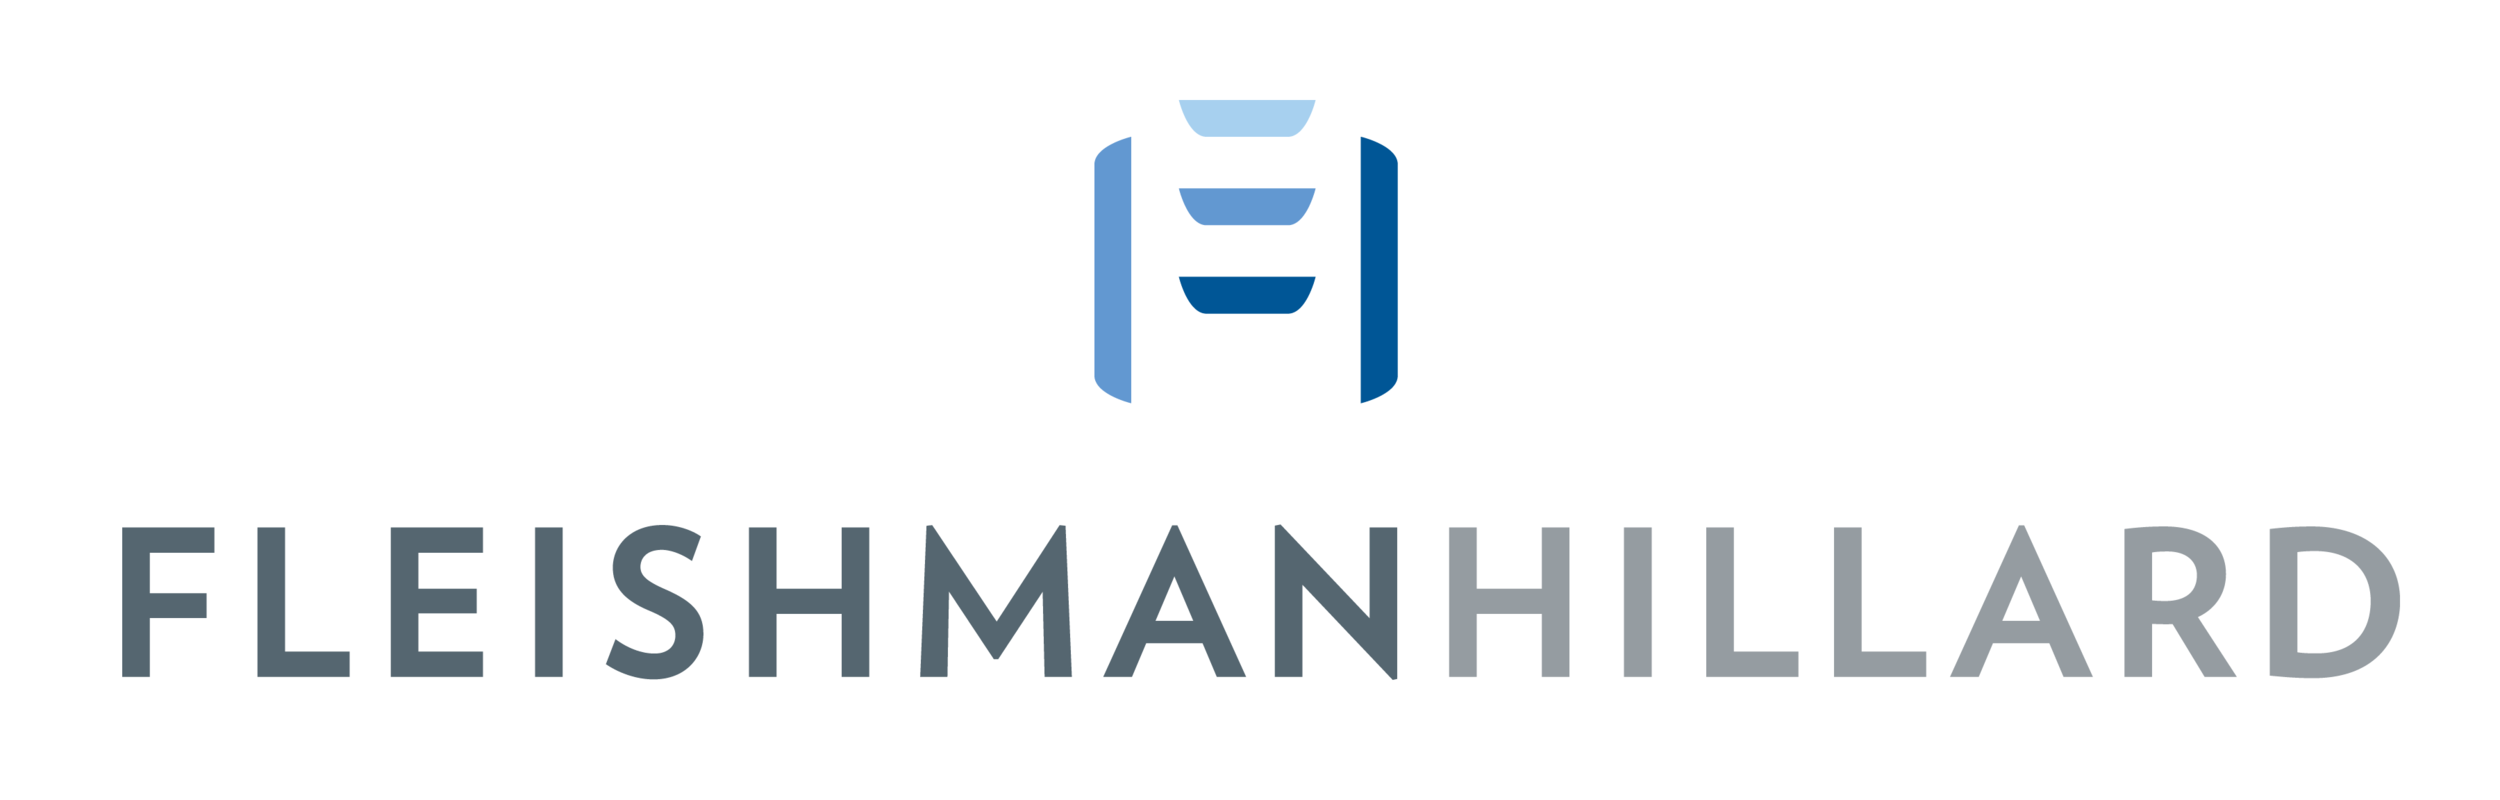 FleishmanHillard_logo.png